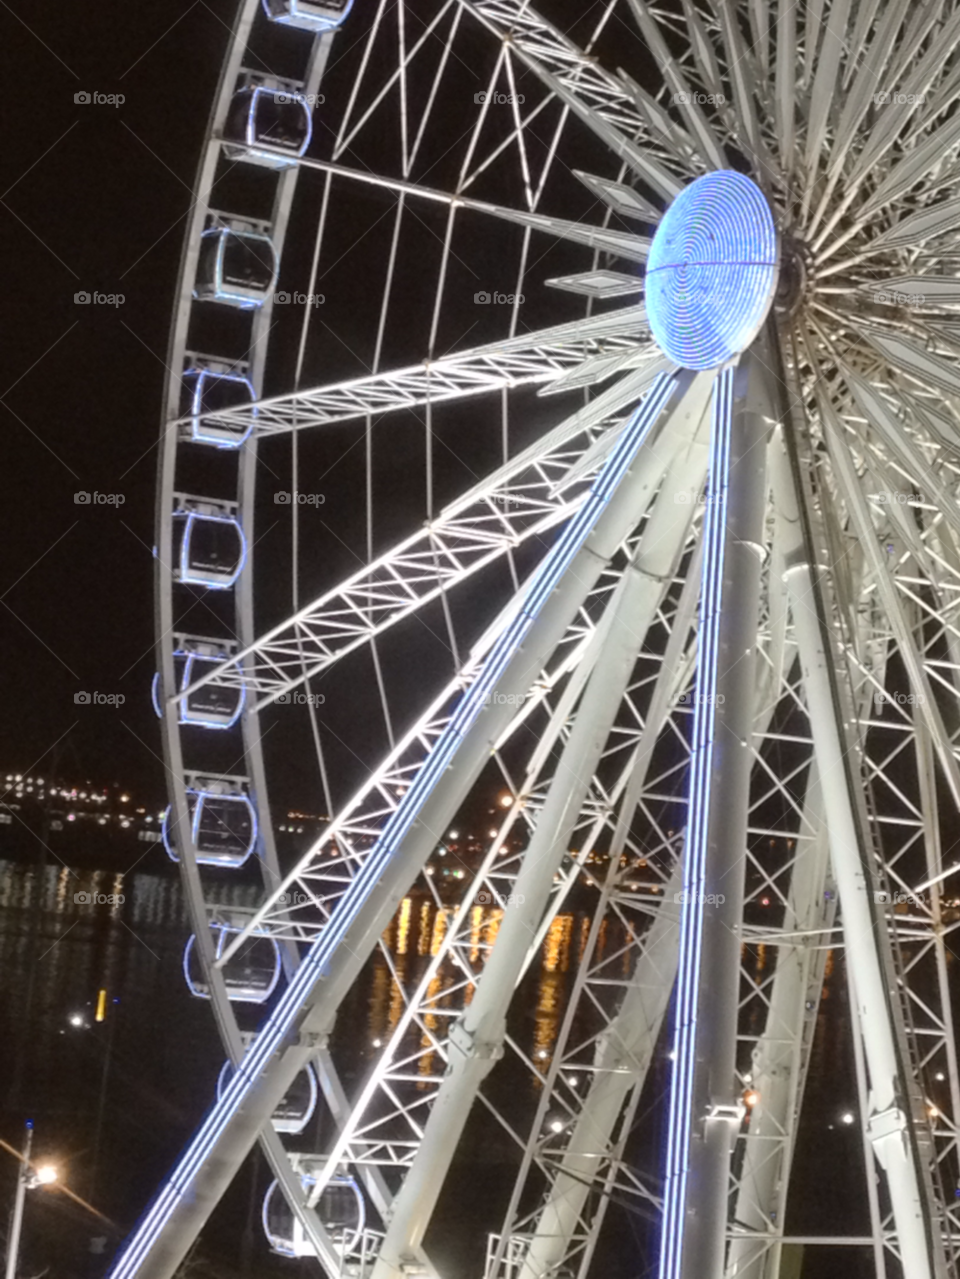 england ferris wheel liverpool night city by gbp